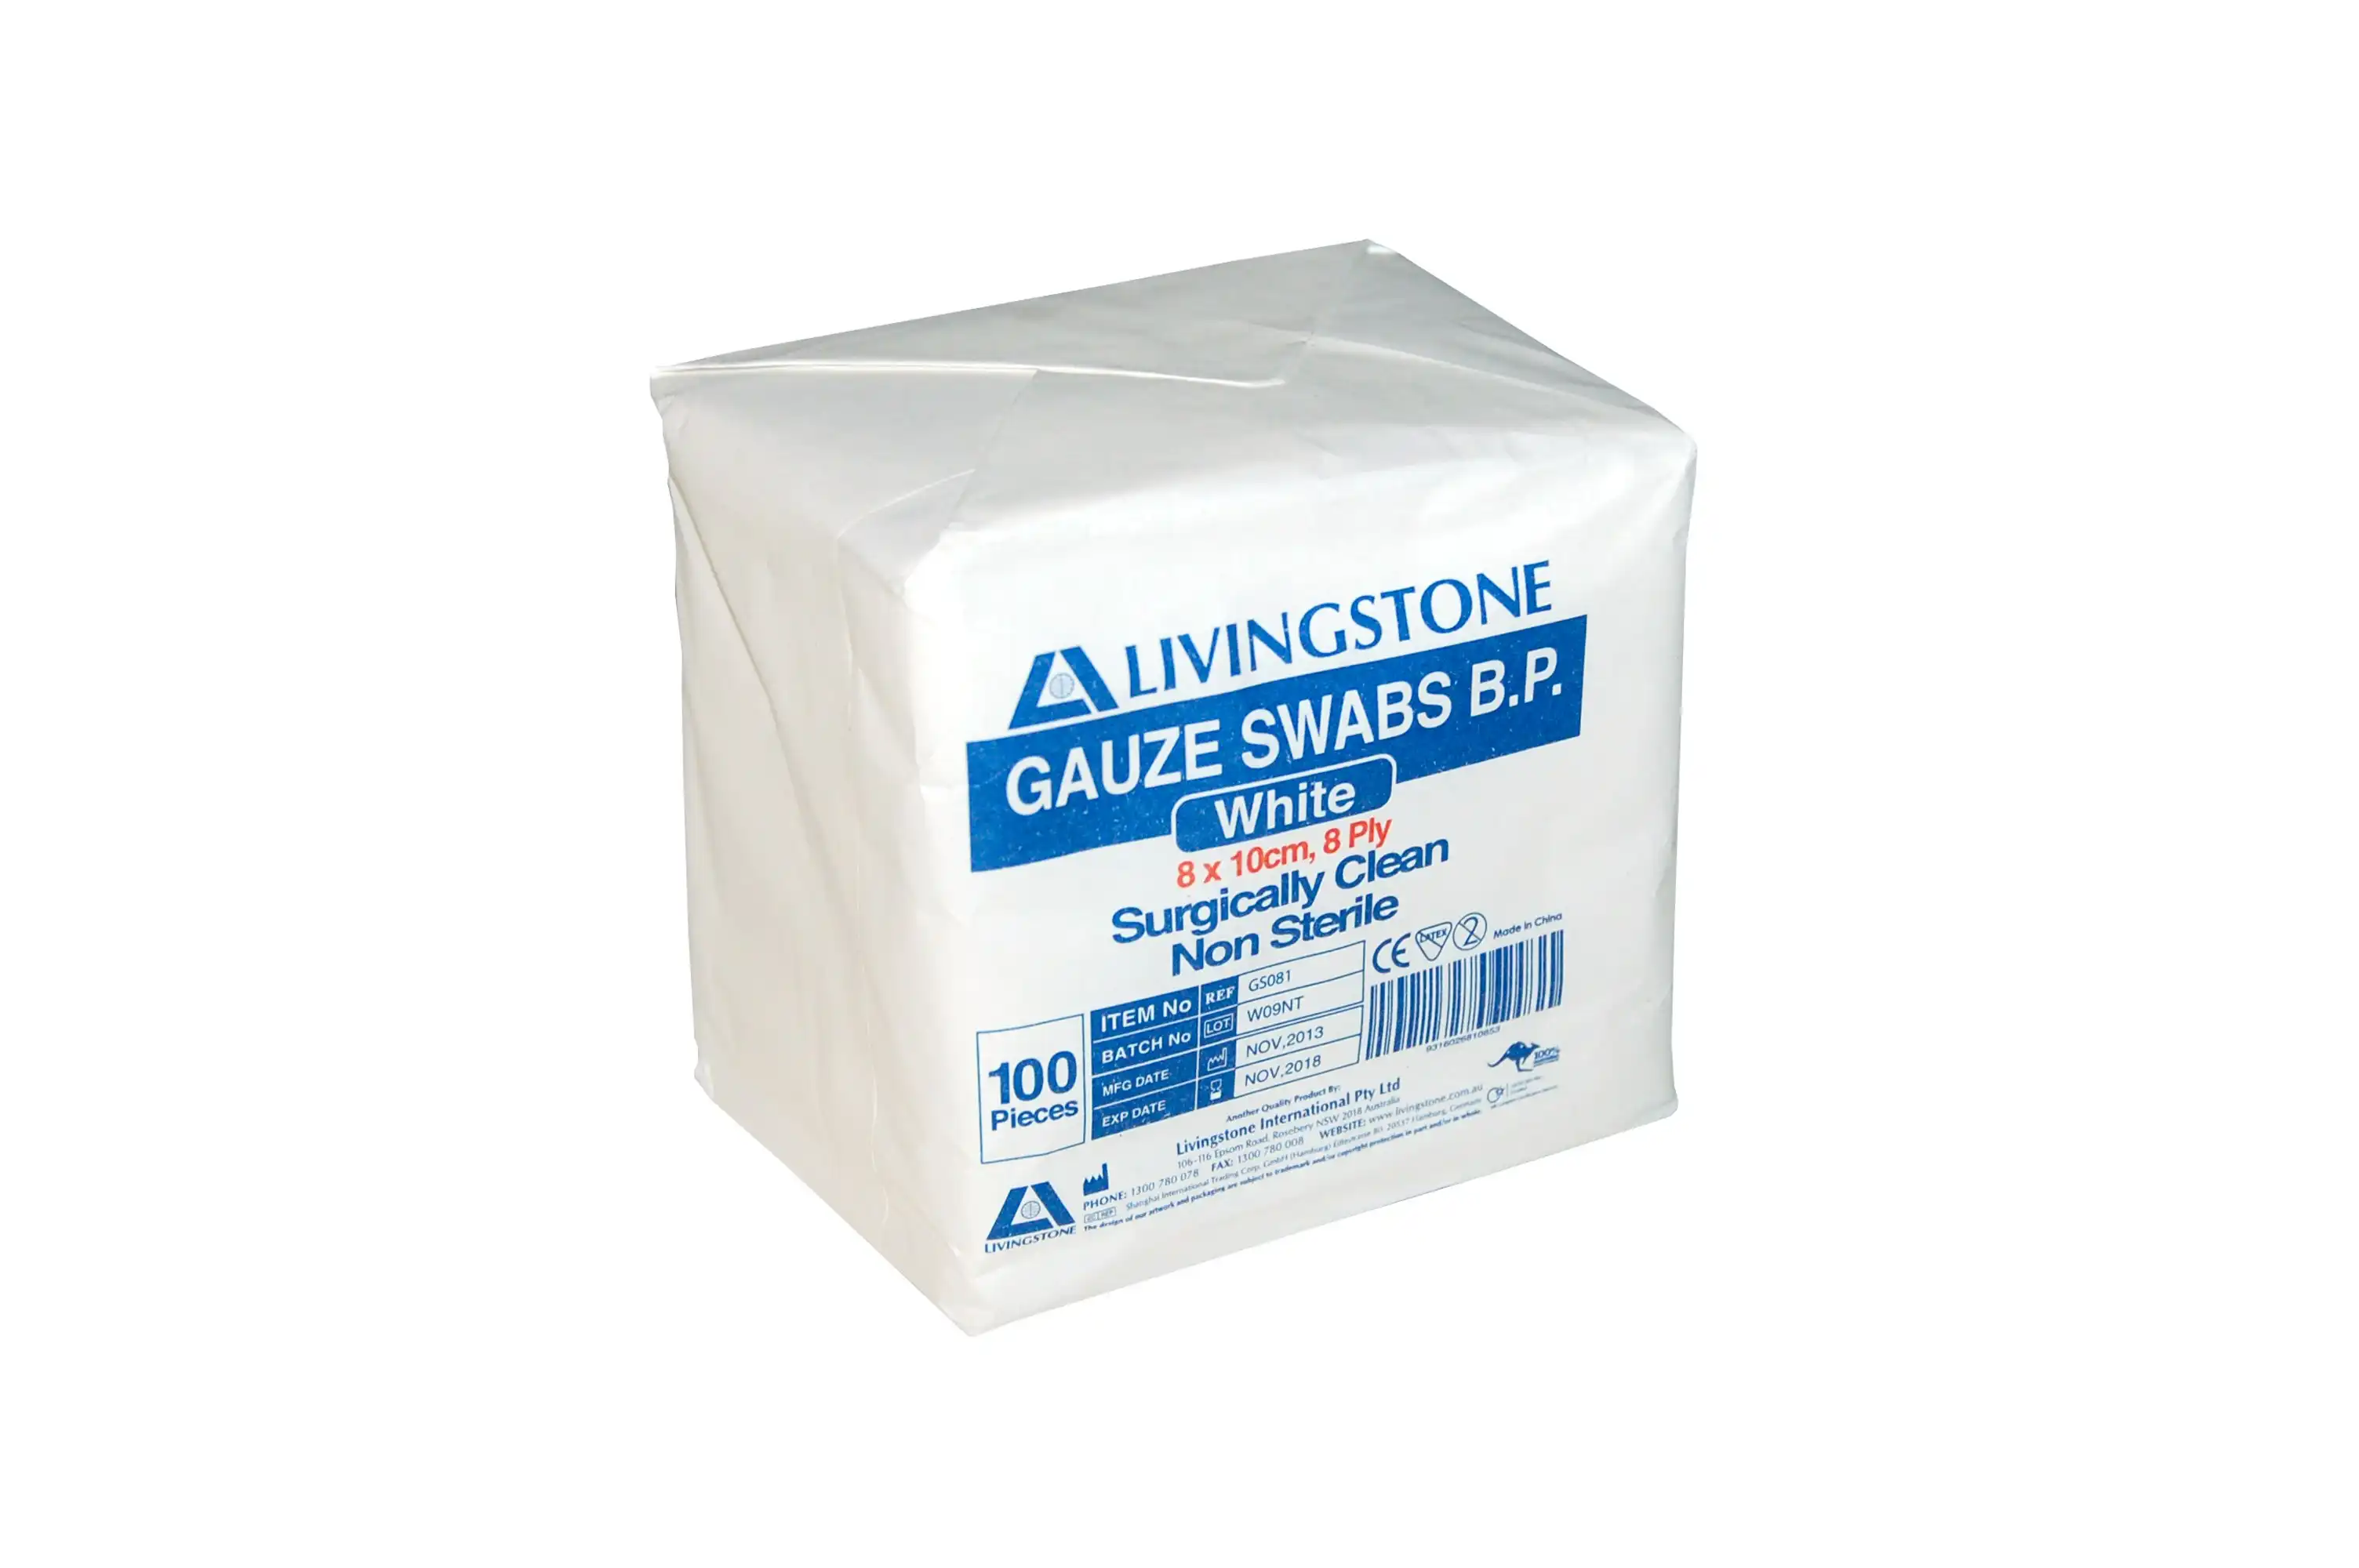 Livingstone Gauze Swabs 8 x 10 cm x 8 Ply Non-Sterile 100 Pack